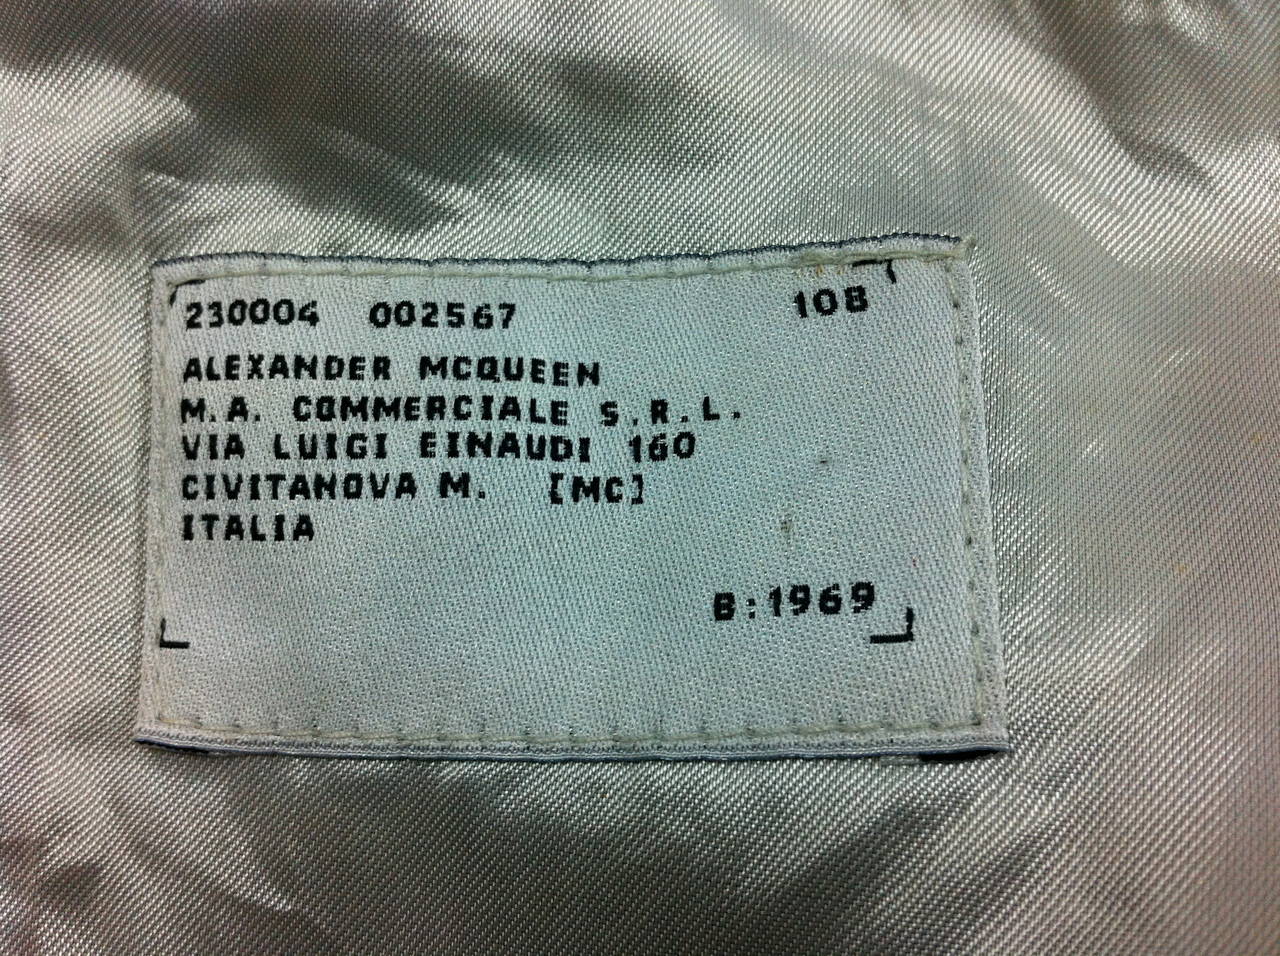 Rare Alexander Mcqueen Mens 1995/6 Jacket with McQueen's date of birth label 1